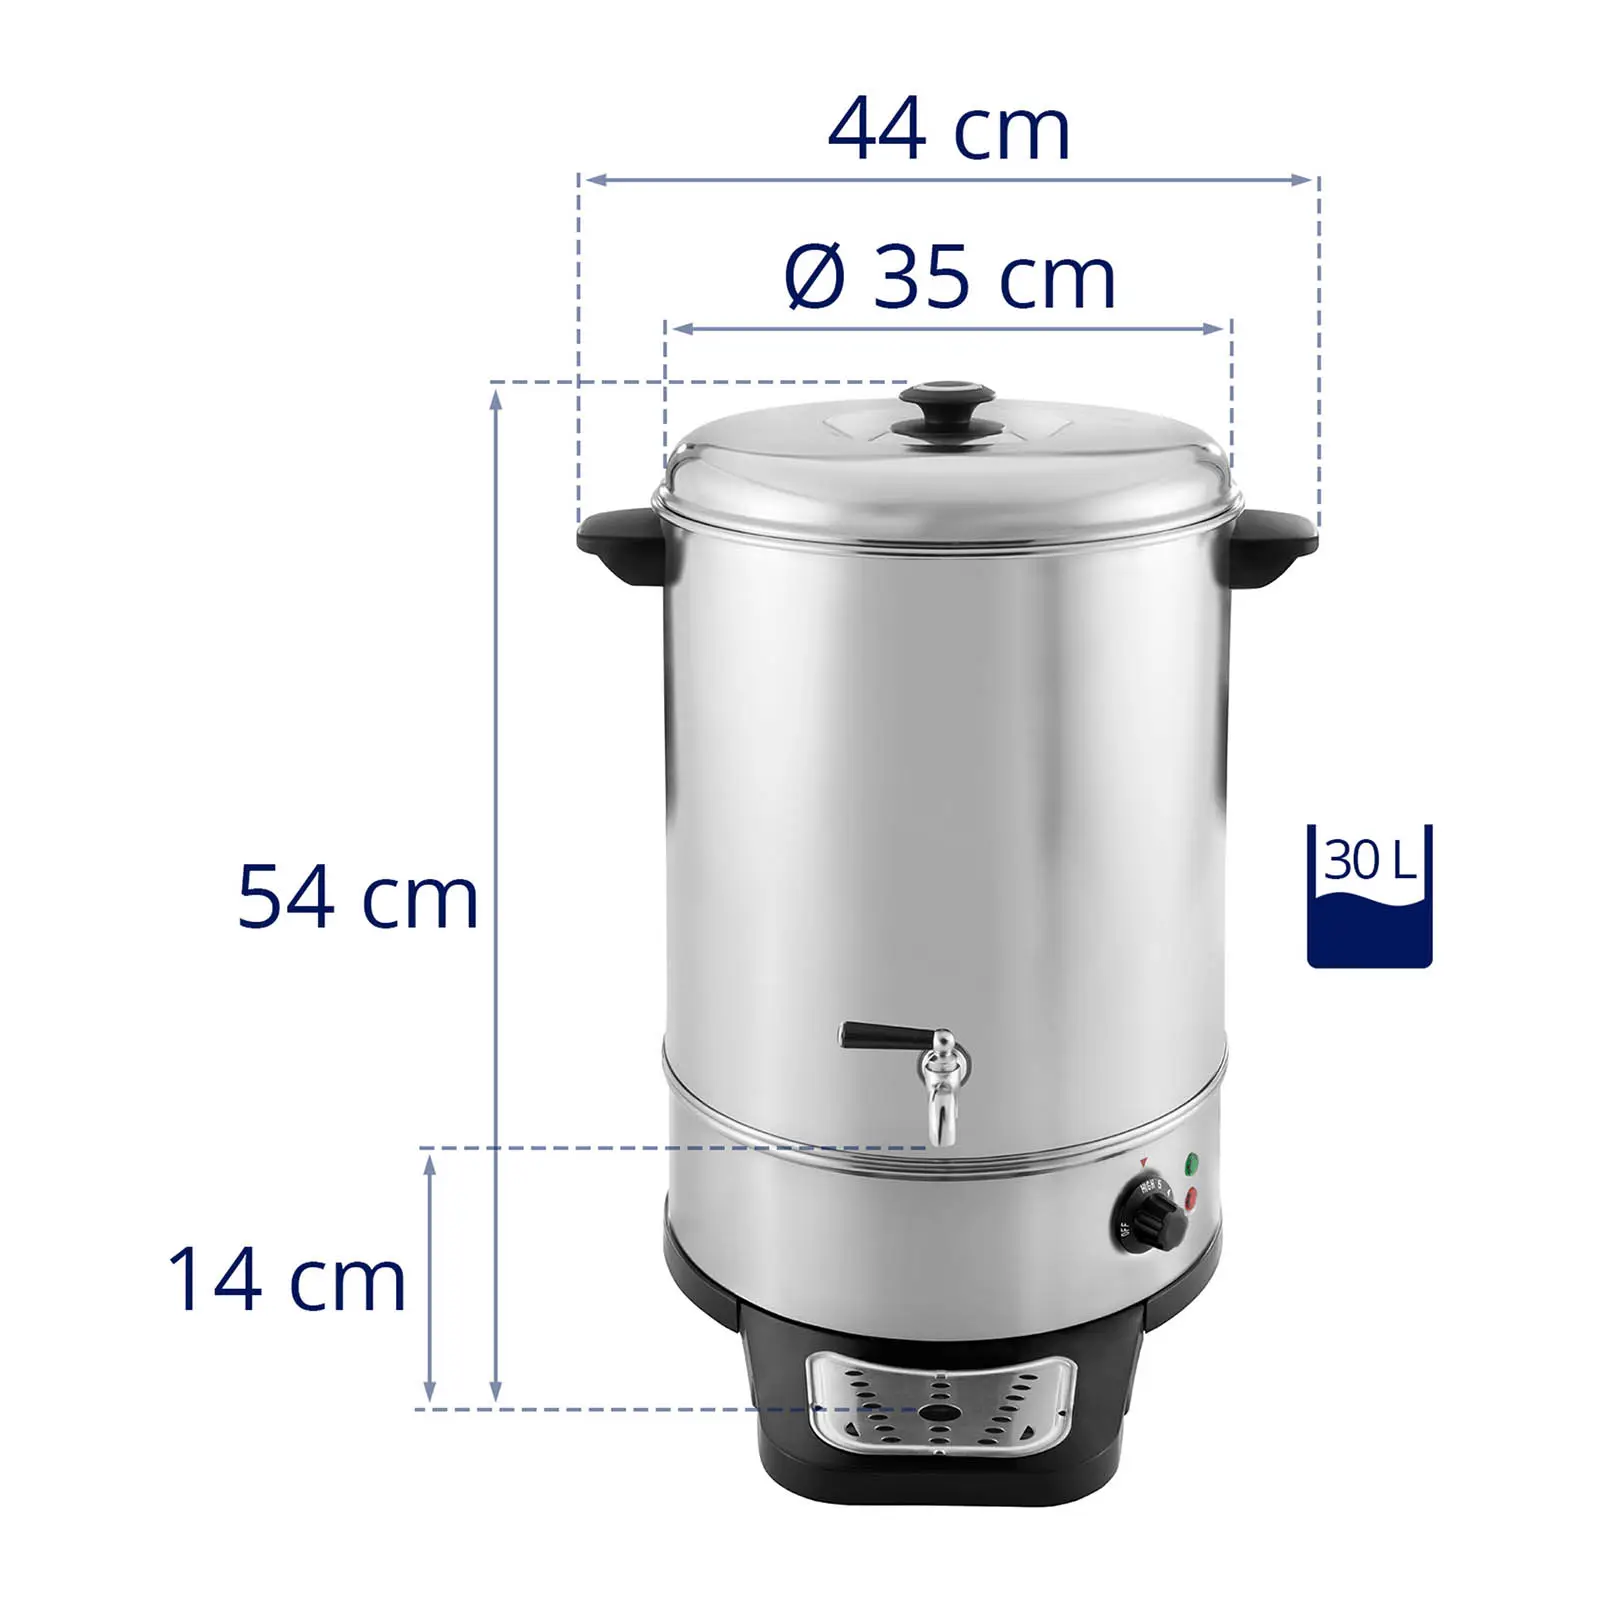 Hot Water Dispenser - 30 litres - 2500 W